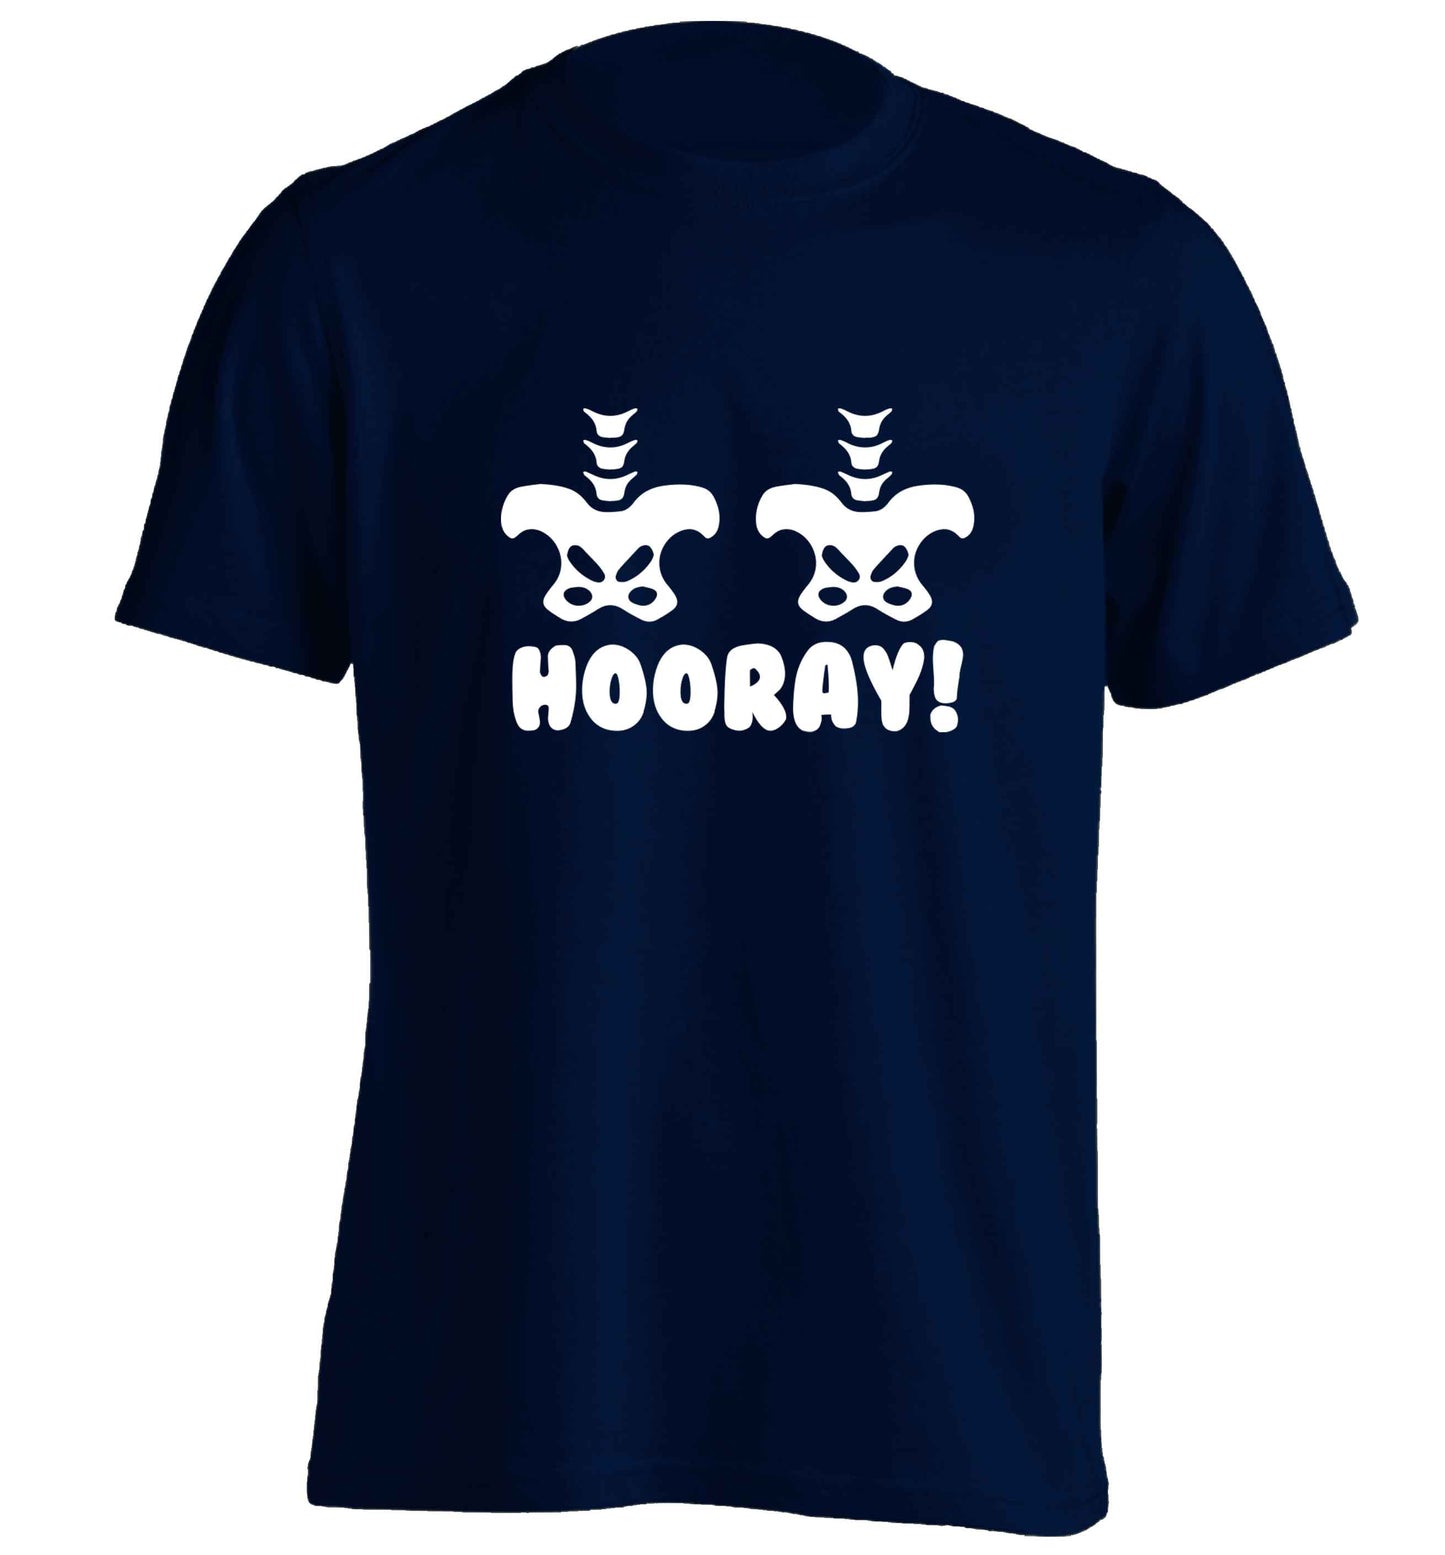 Hip Hip Hooray! adults unisex navy Tshirt 2XL